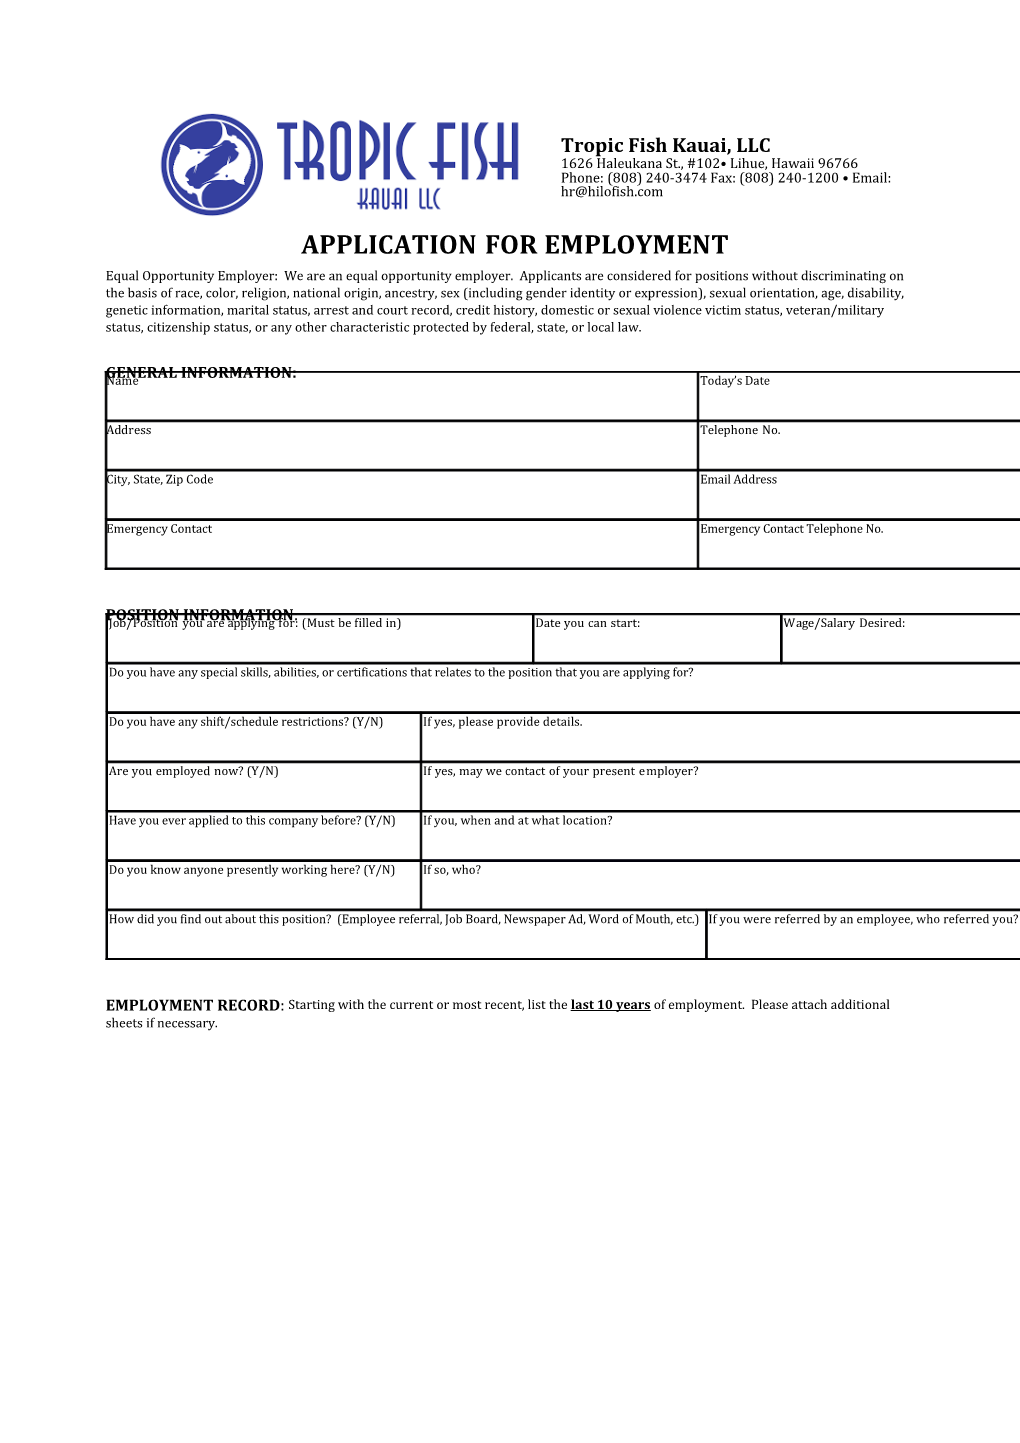 Hilo Fish Company, Inc. Application